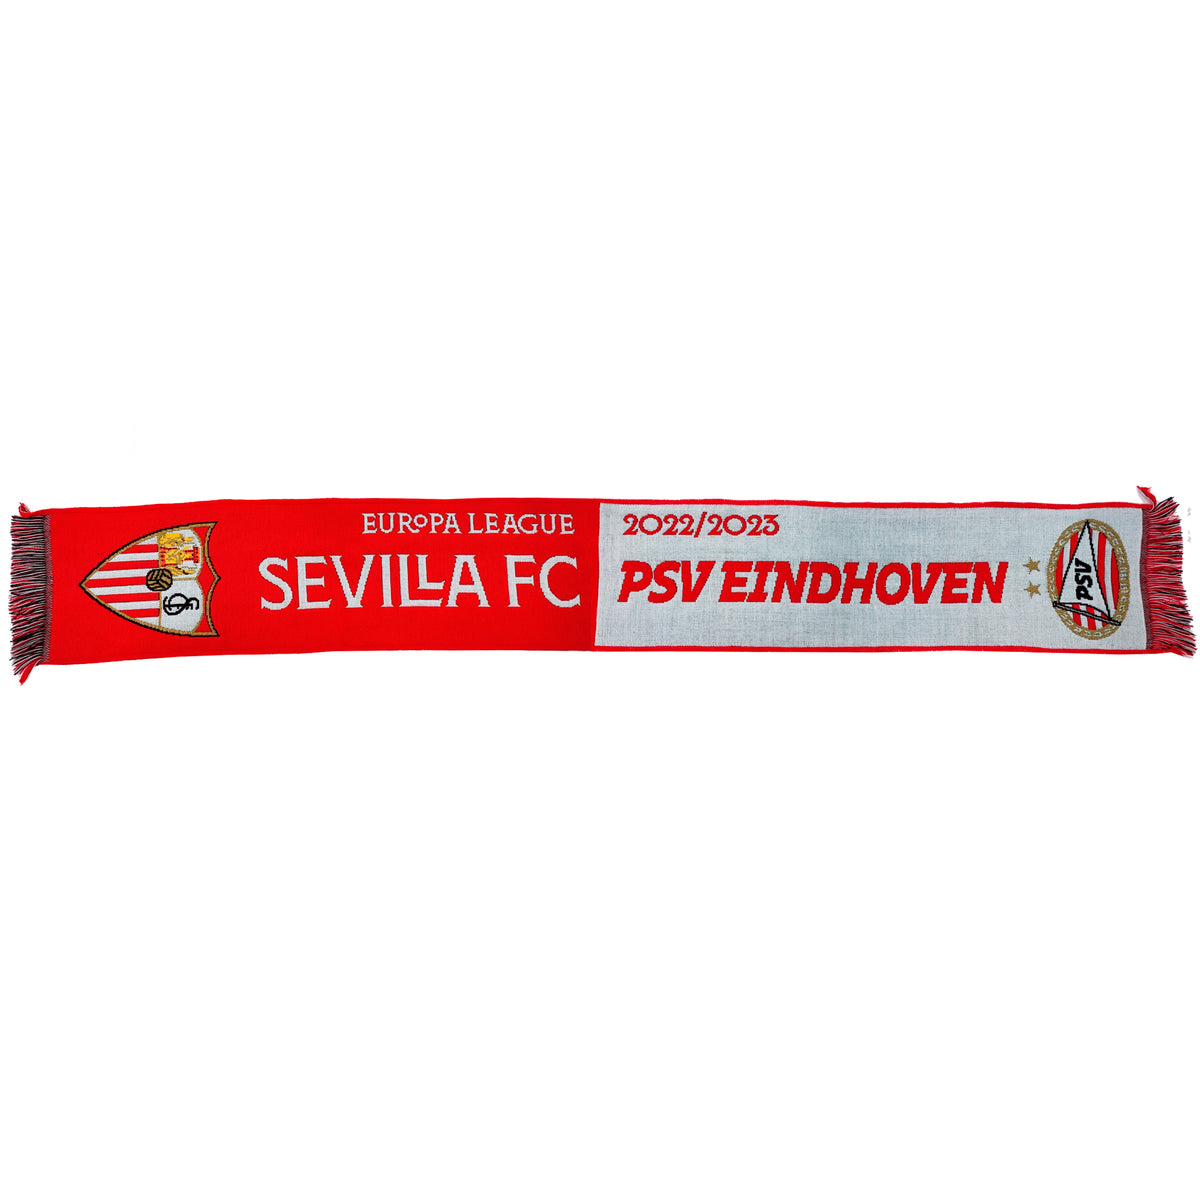 Europa League - PSV Eindhoven scarf